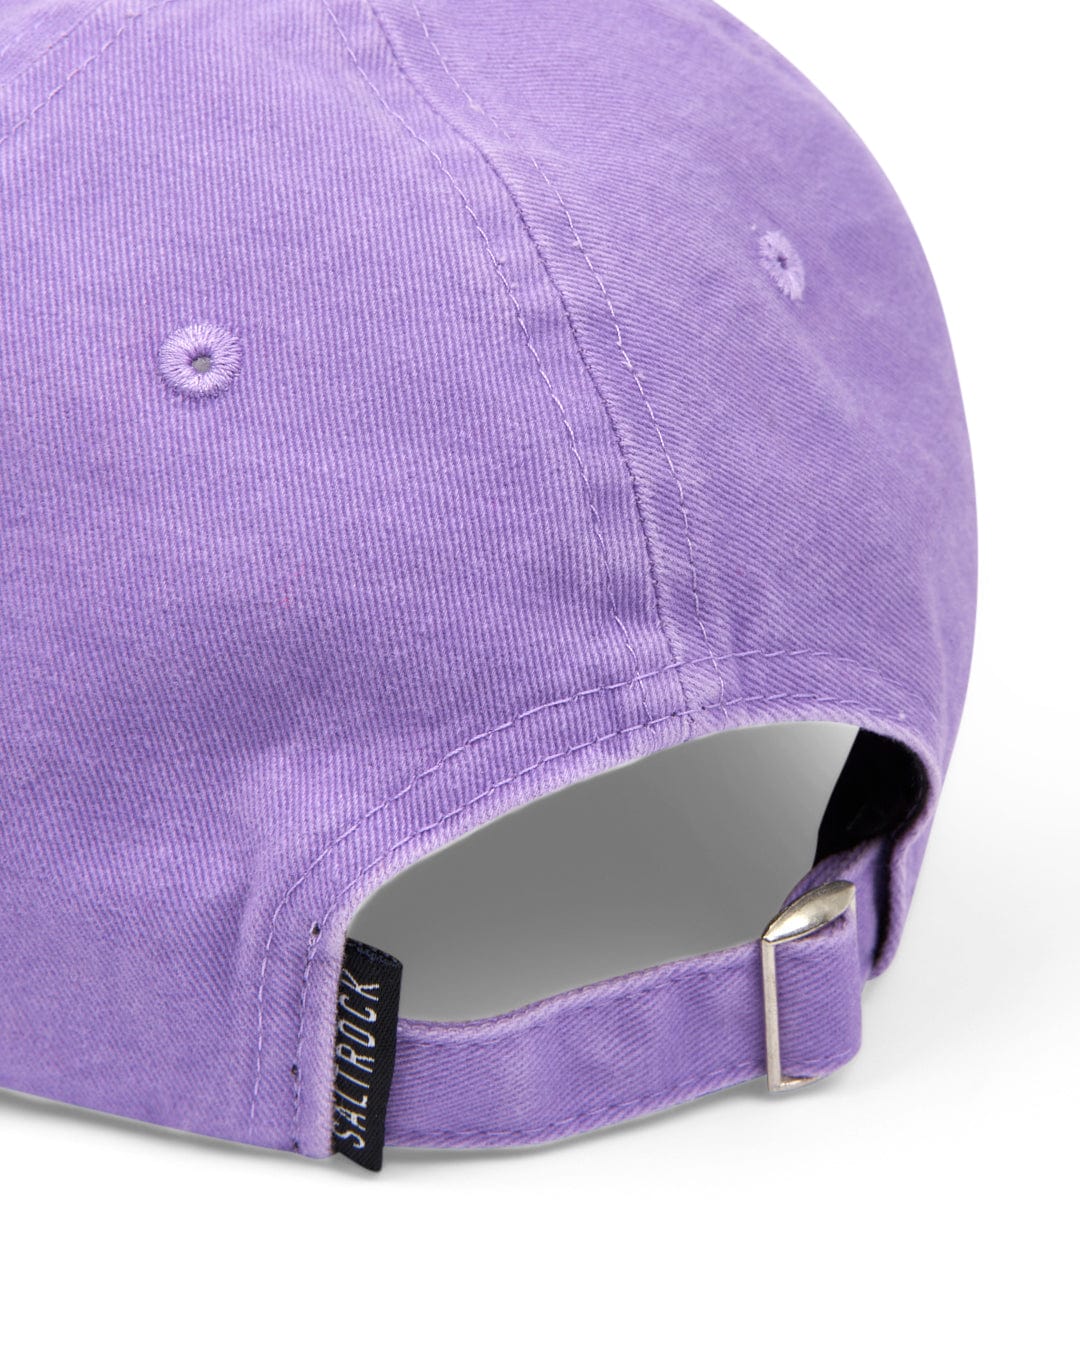 A close-up of a Saltrock Palm Cap - Purple's adjustable strap, featuring Saltrock embroidery.